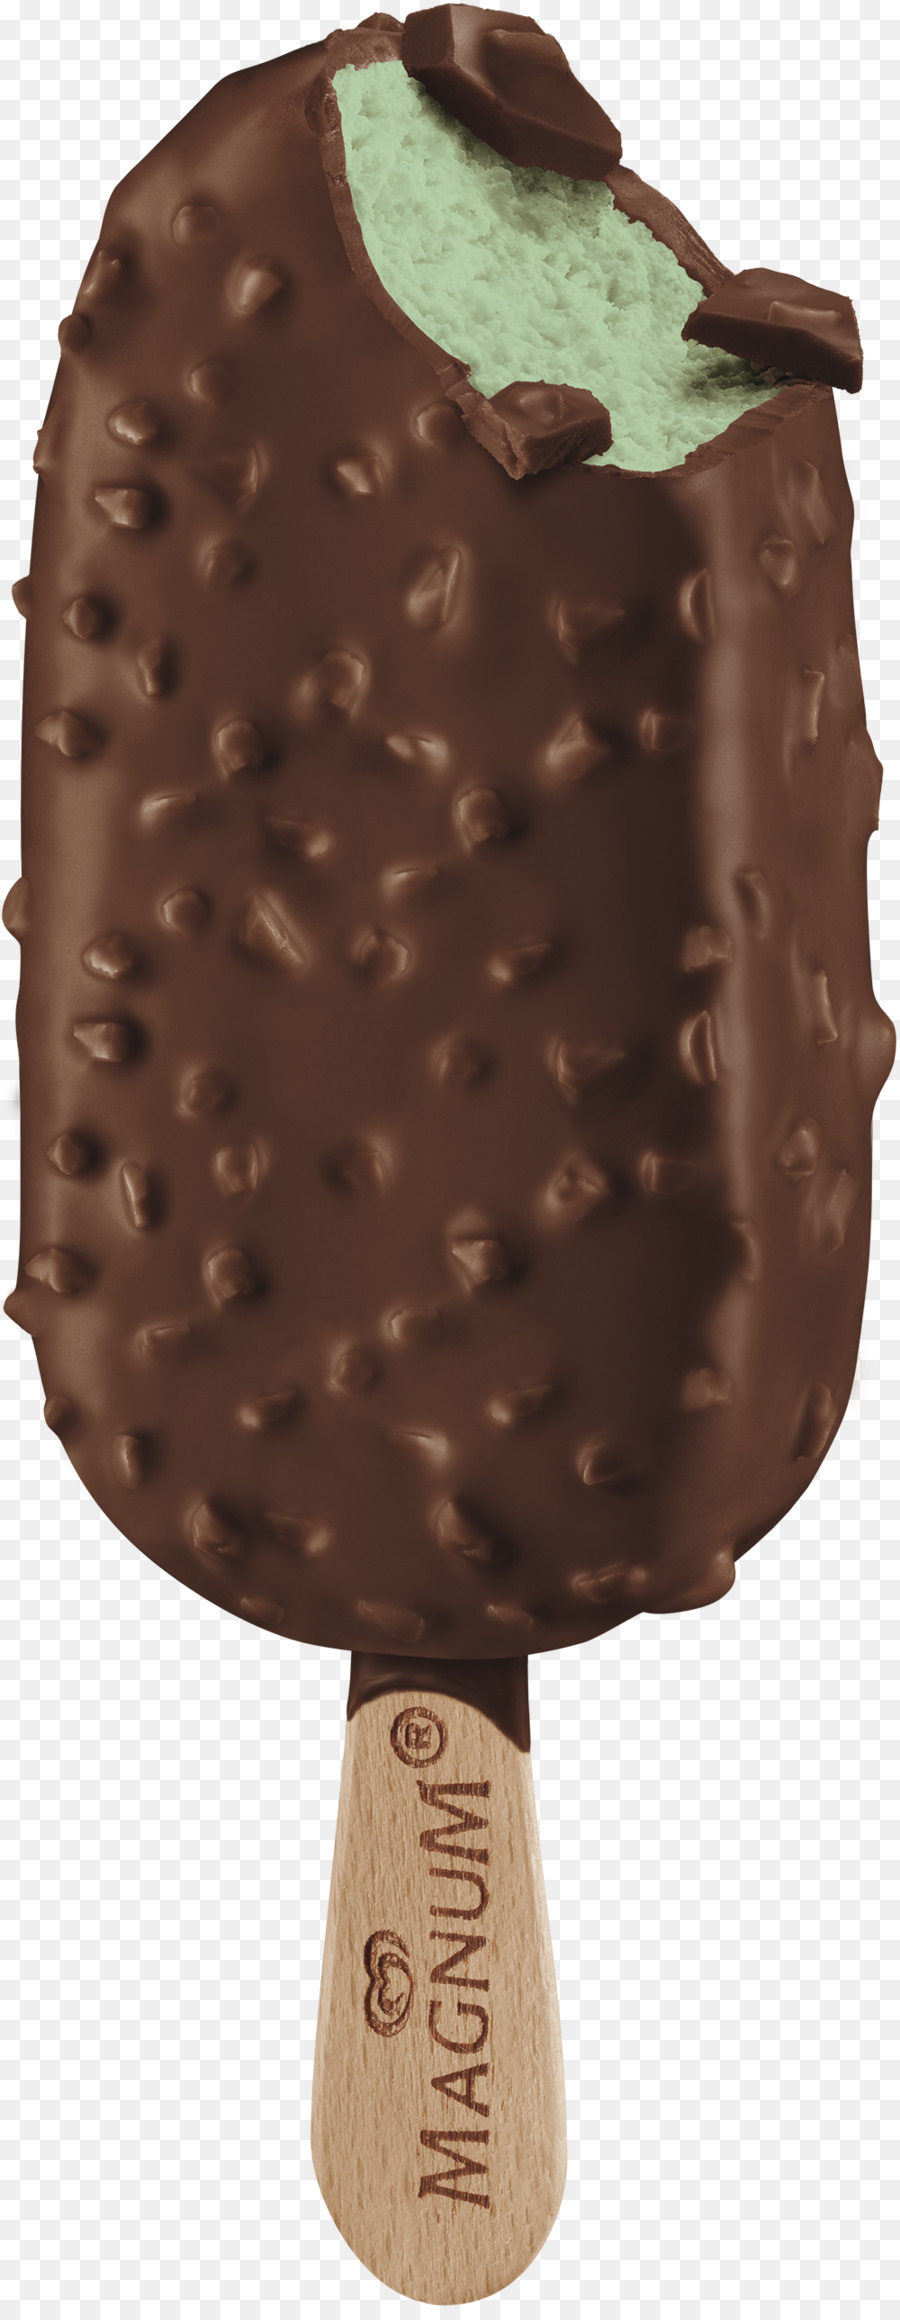 Chocolate ice cream Death by Chocolate-Fudge-Pralinen - Eis